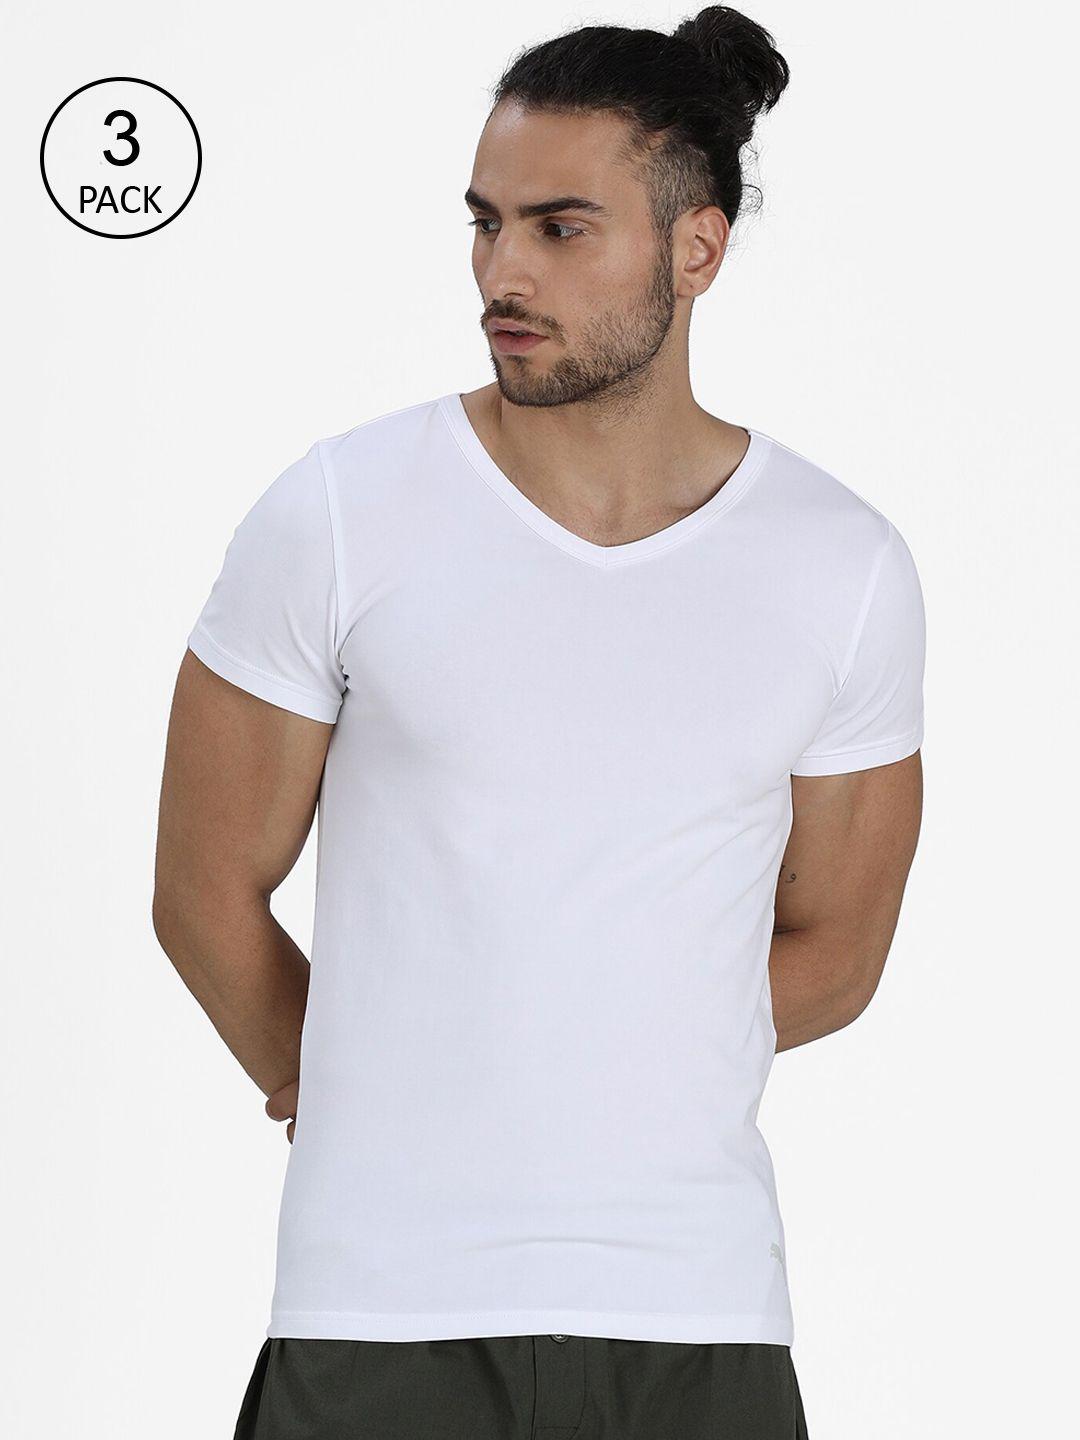 puma-pack-of-3-men-white-cotton-basic-v-neck-vest